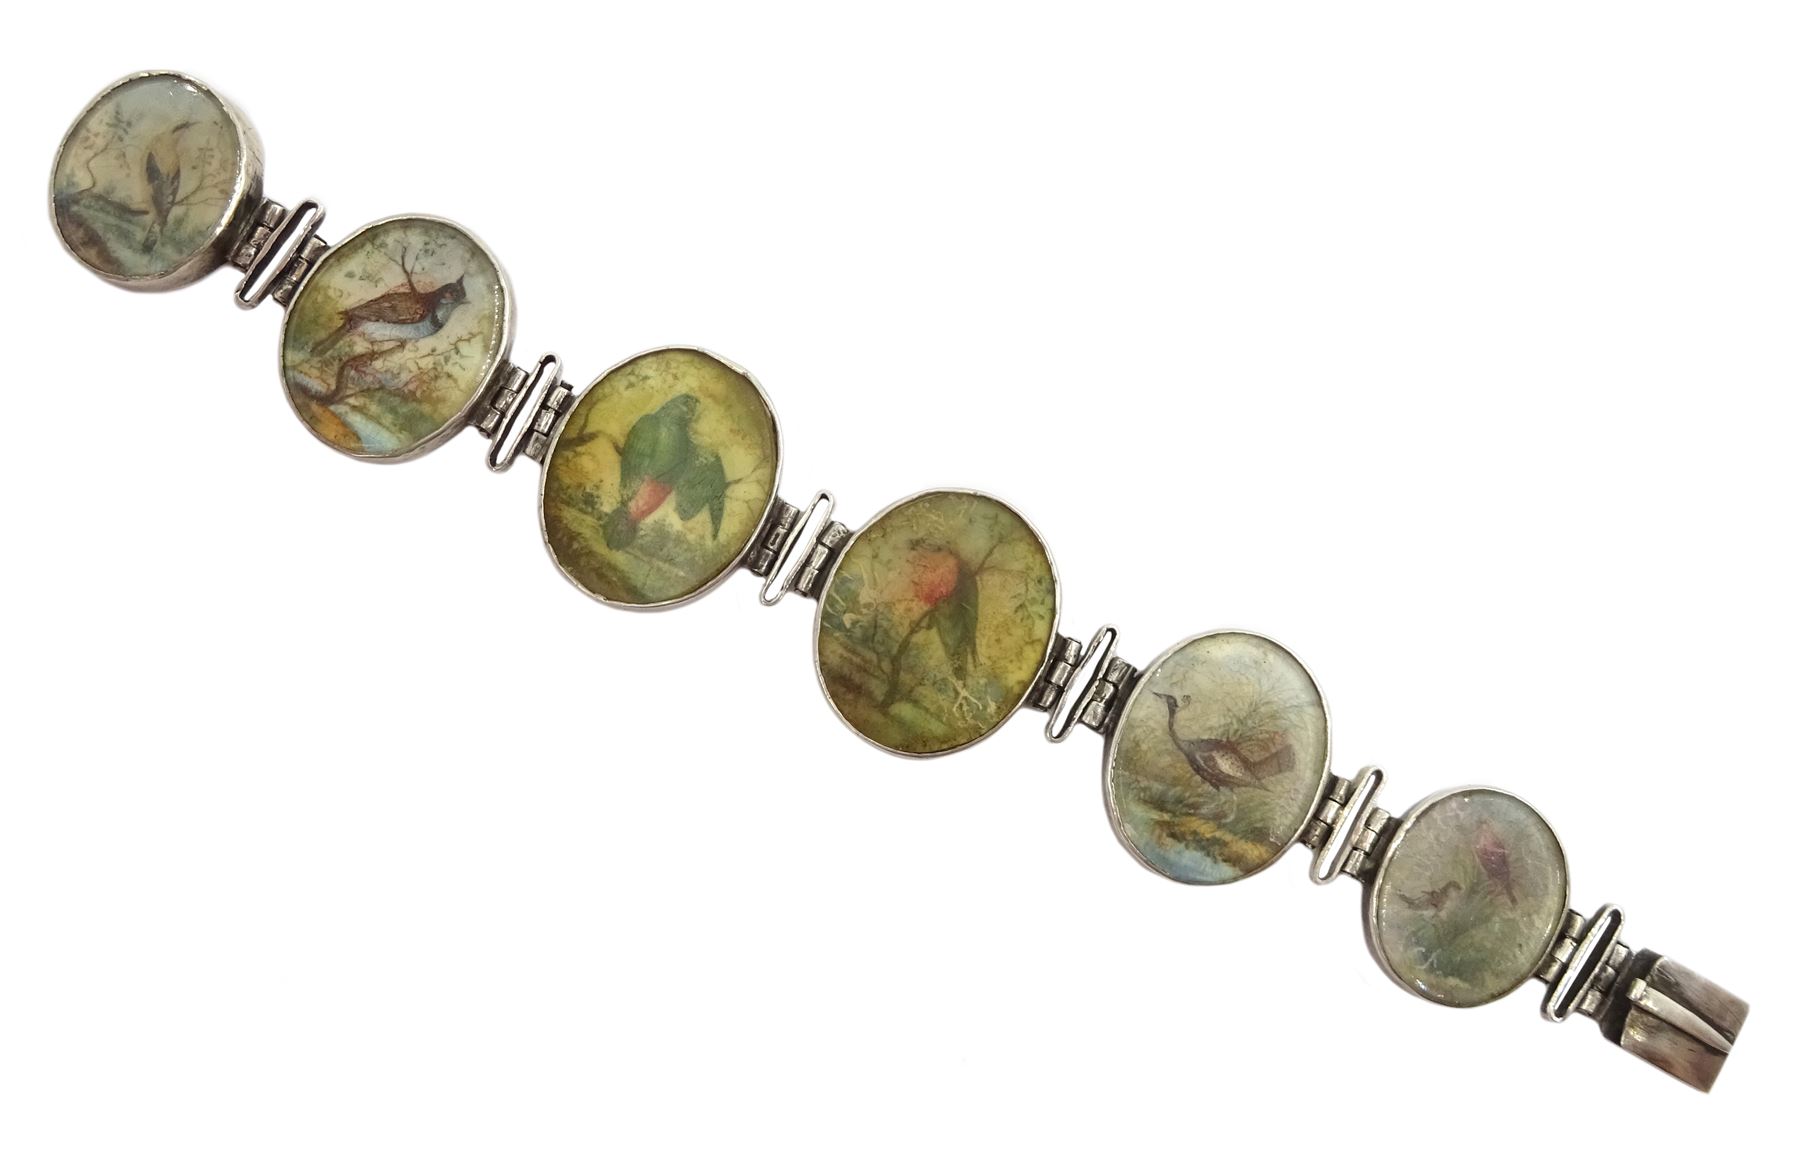 19th century silver oval link bracelet - Image 2 of 2